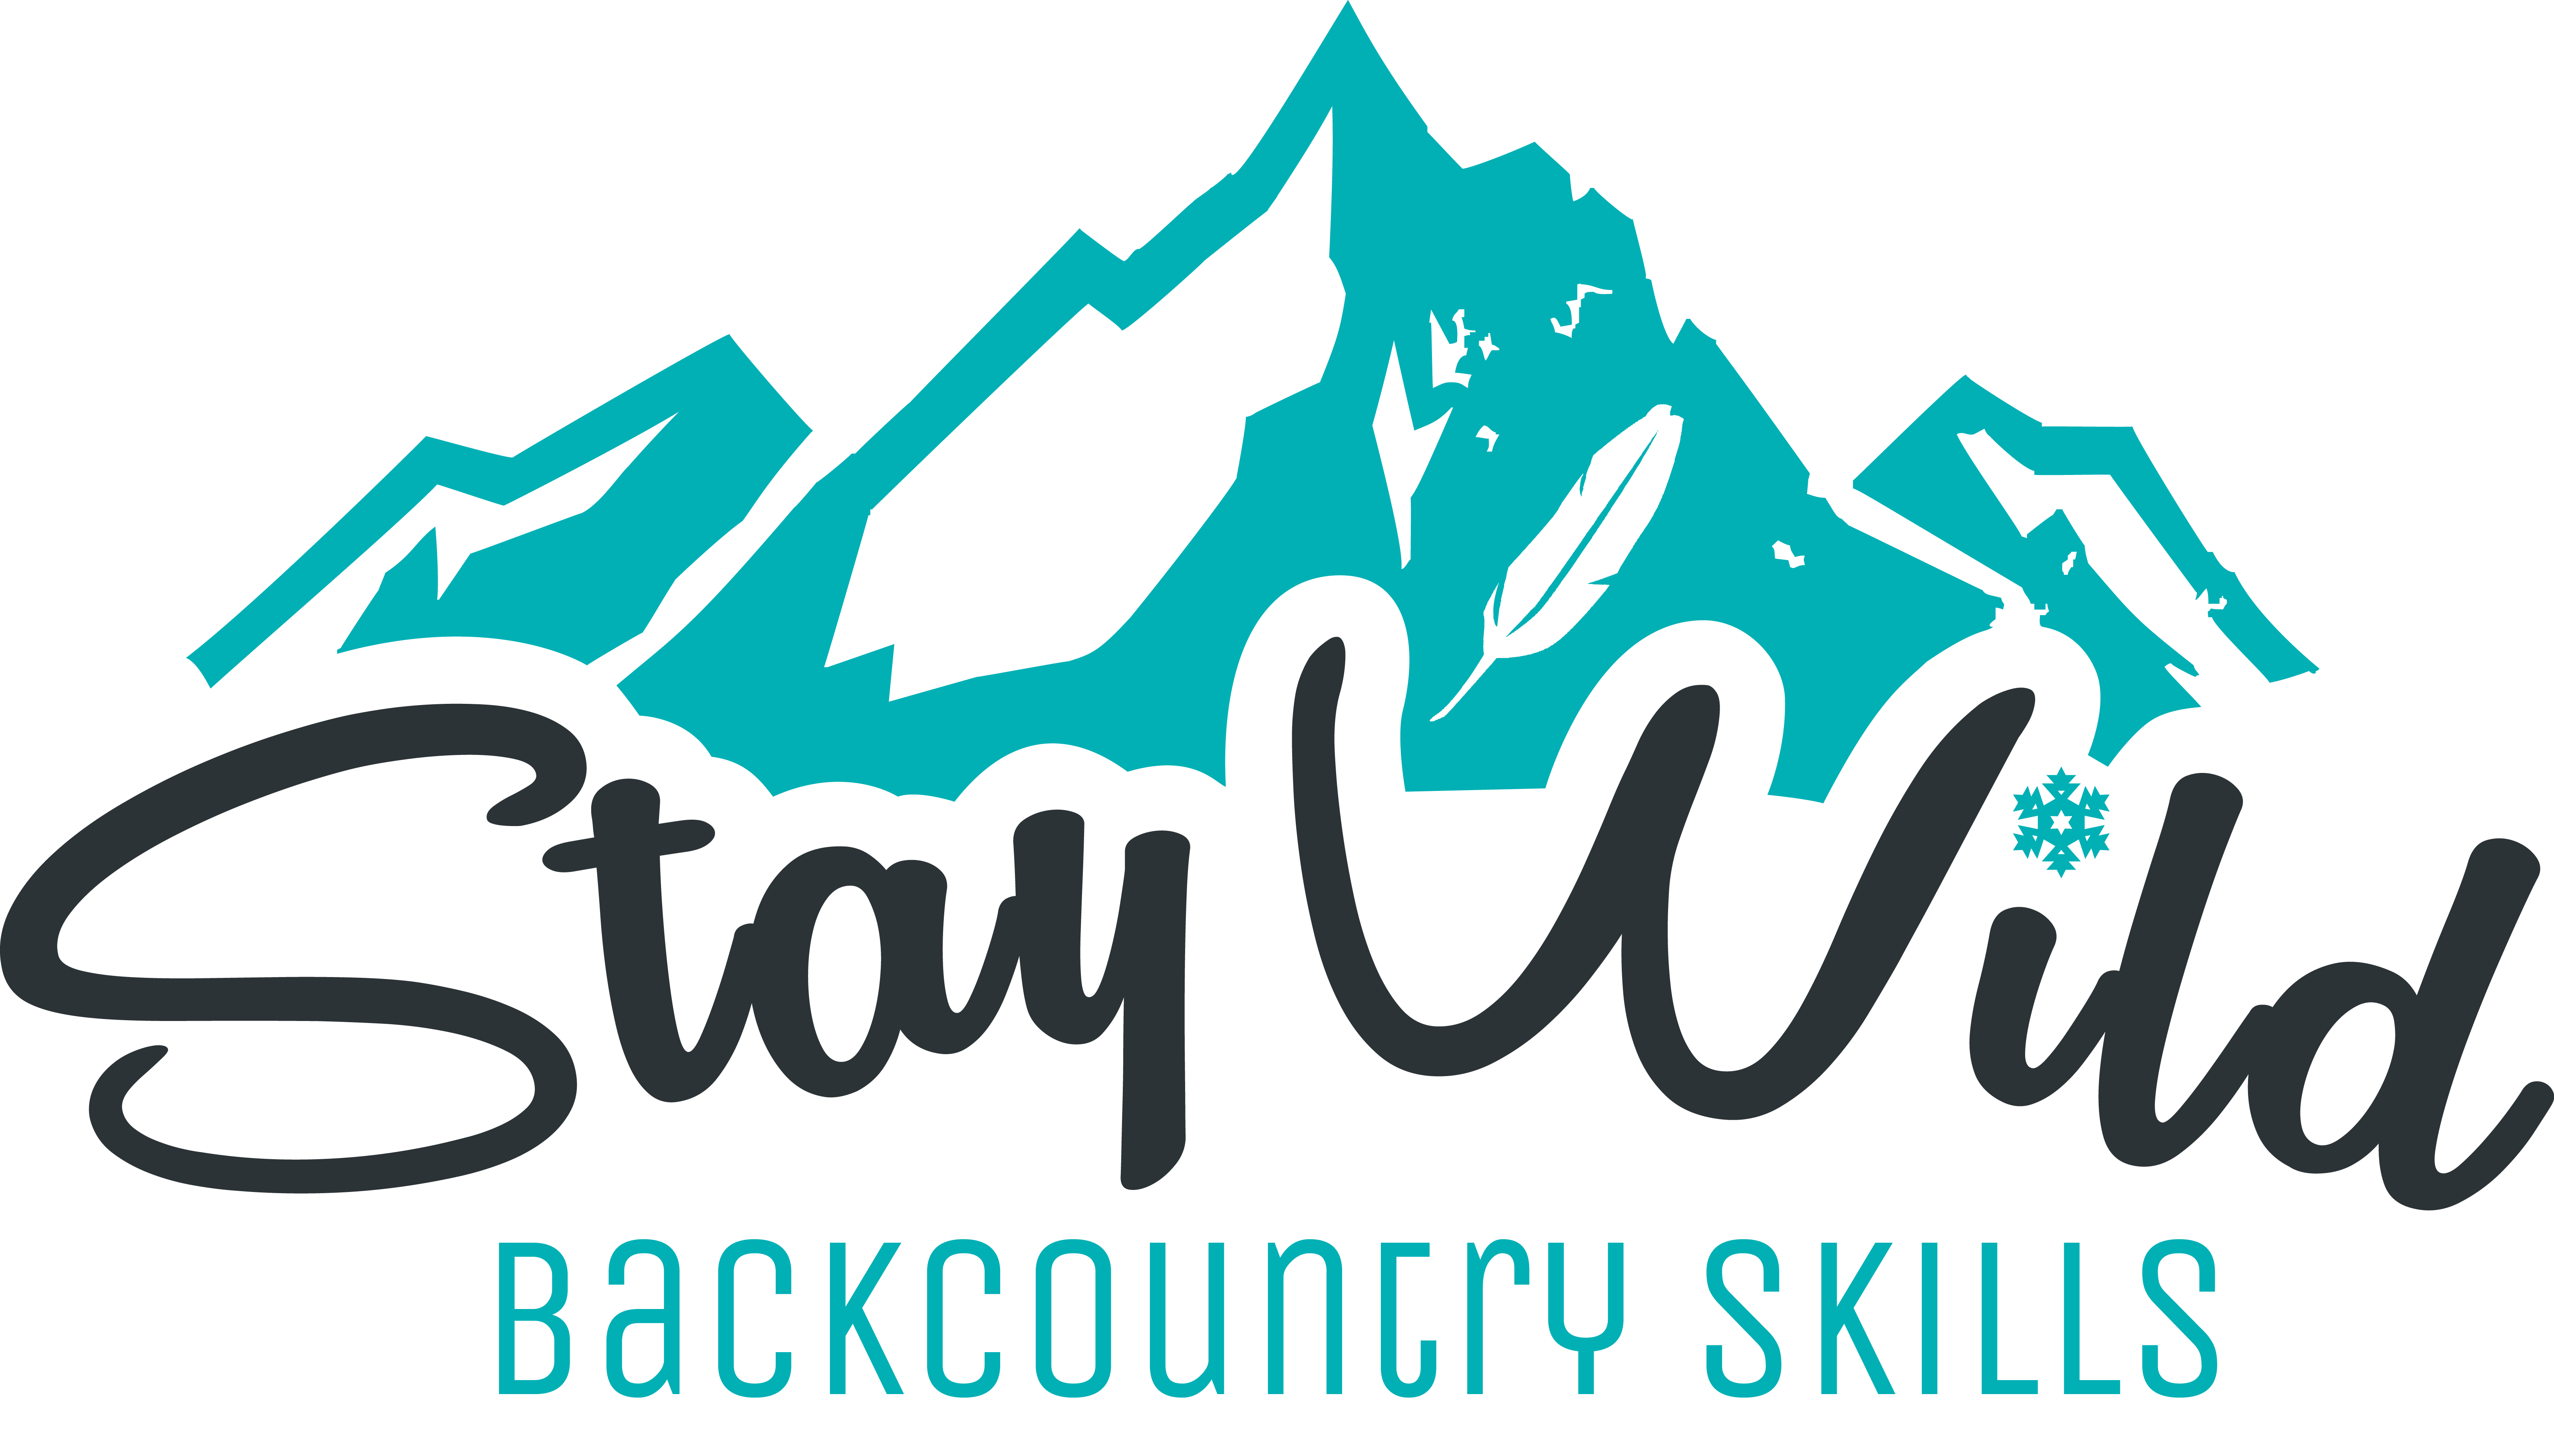 Stay Wild Backcountry Skills